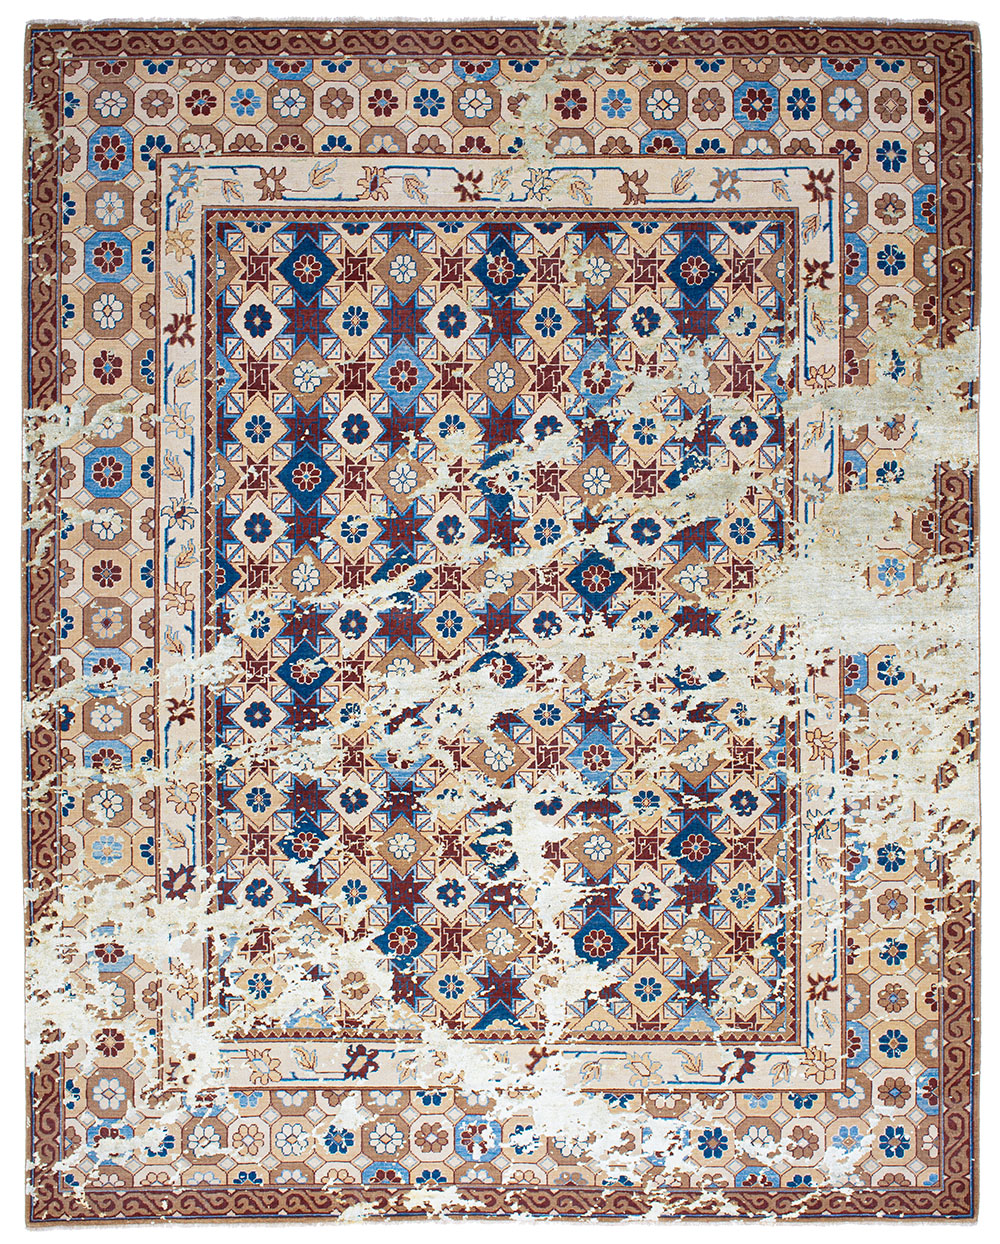 Kotan Qianlong Sky carpet, East collection, Jan Kath